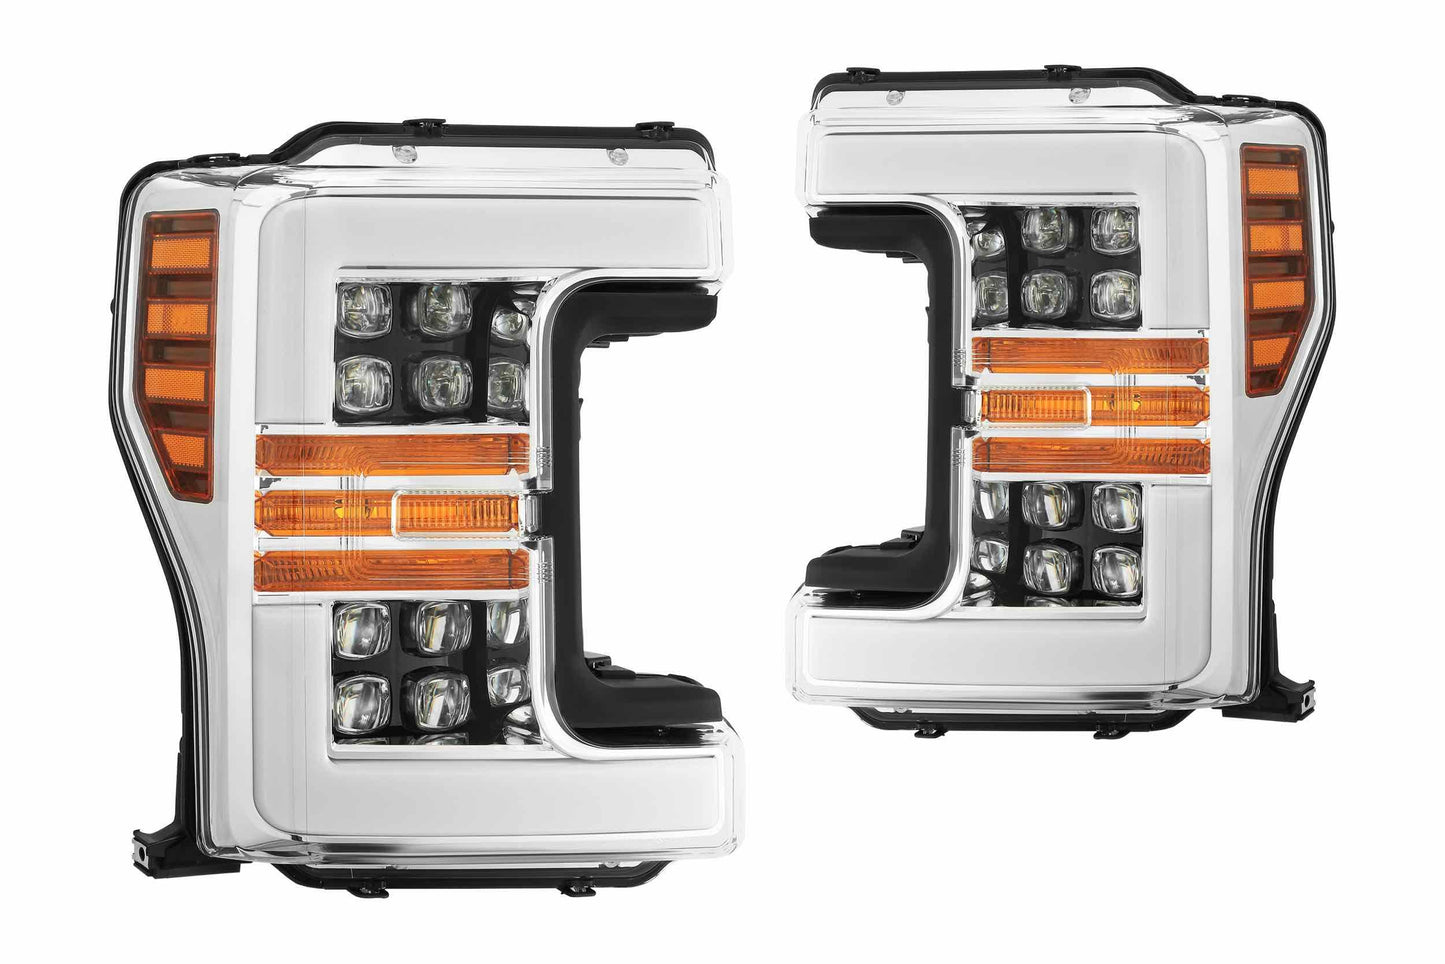 ARex Nova LED Headlights: Ford Super Duty (17-19) - Black (Set)